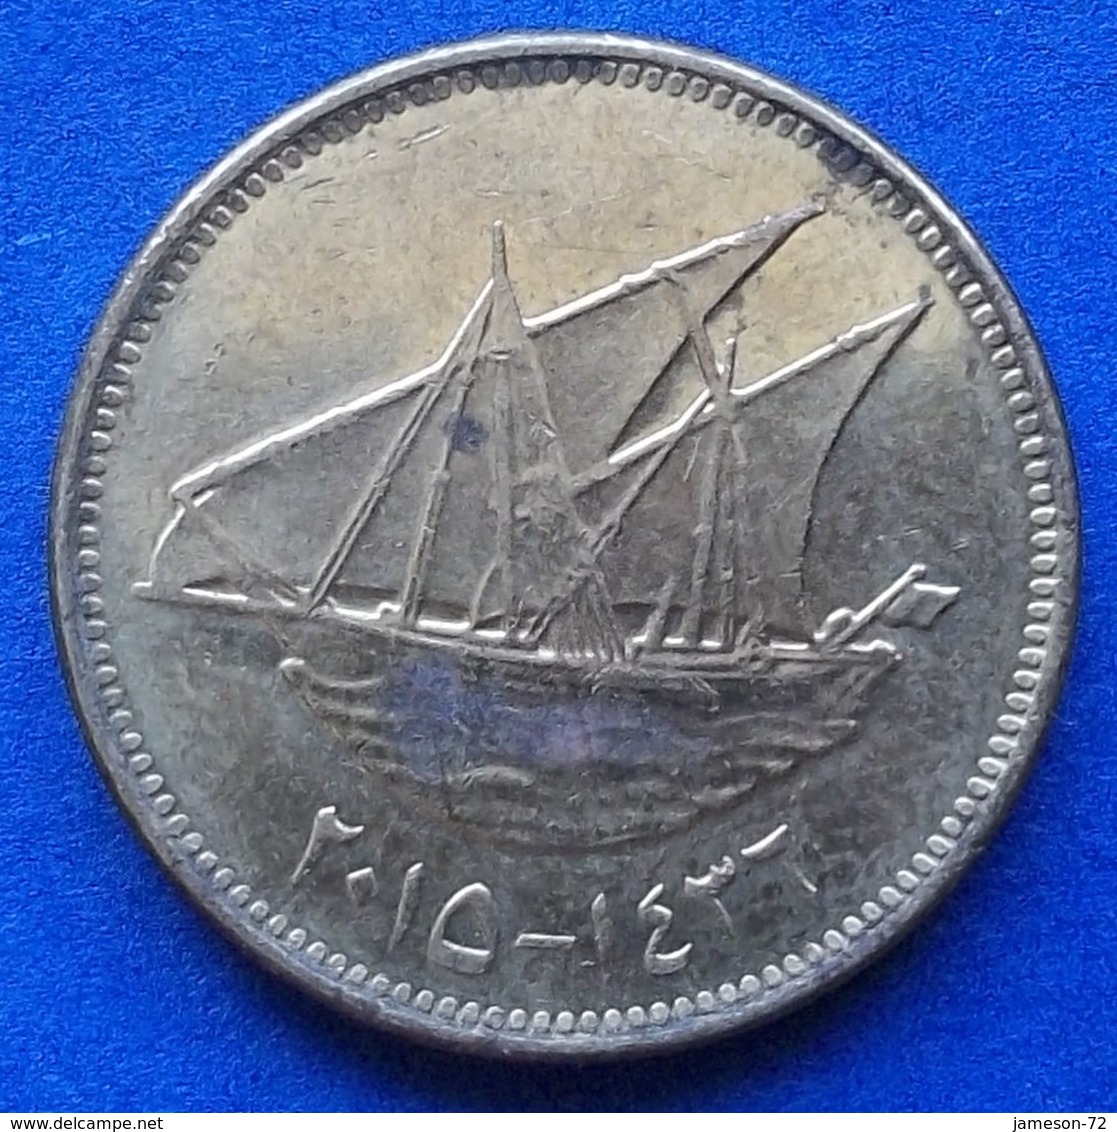 KUWAIT - 10 Fils AH1436 2015AD KM# 11 Sovereign Emirate (1961) - Edelweiss Coins - Kuwait